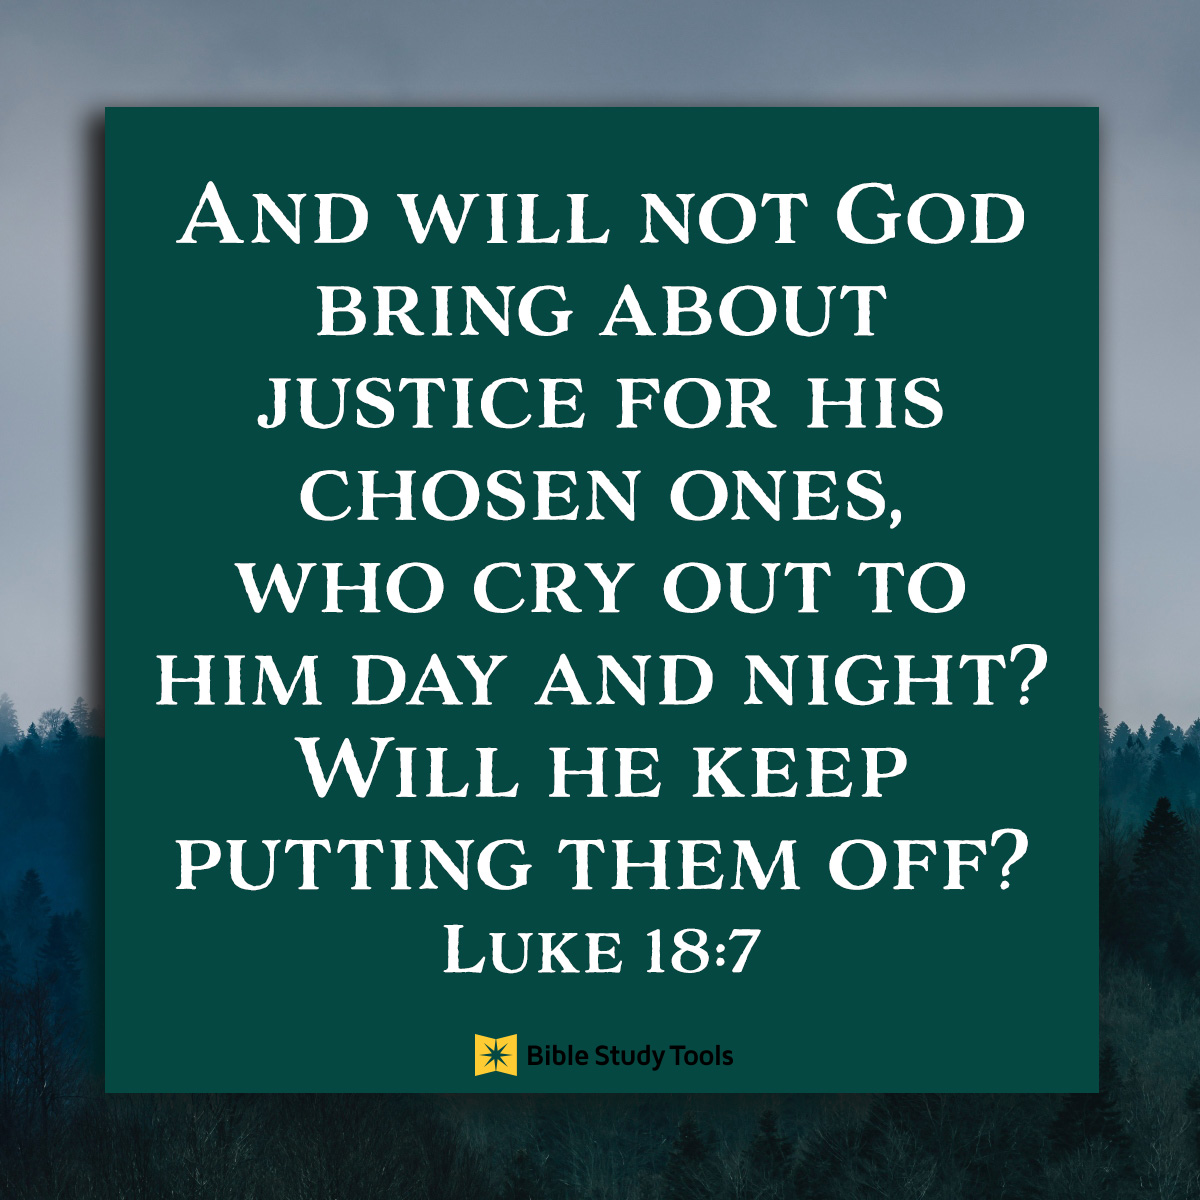 Luke 18:7, inspirational image